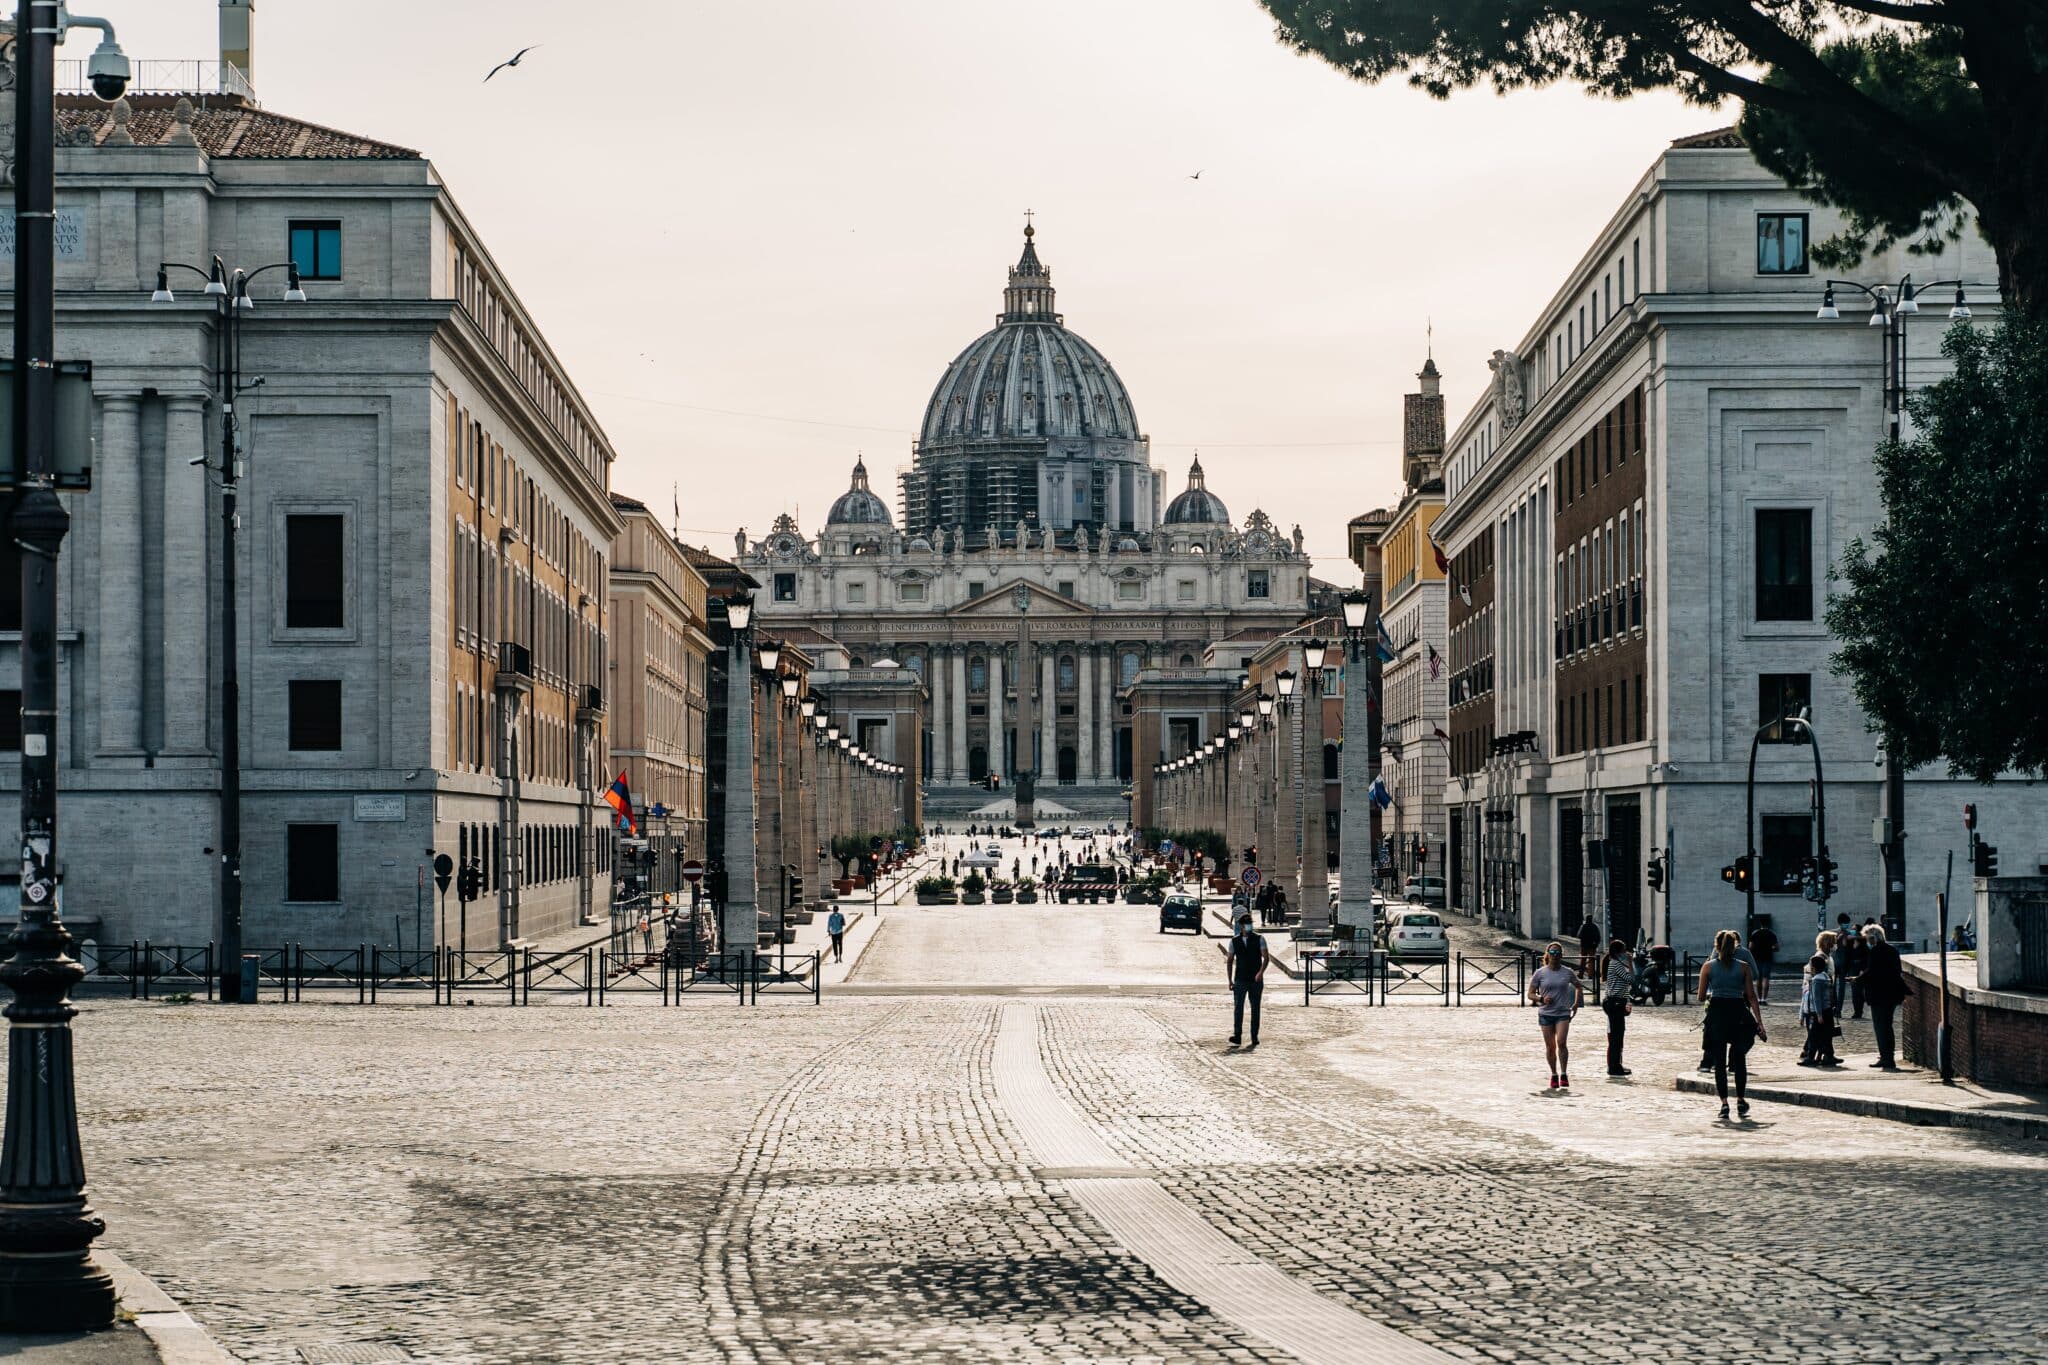 City of Rome | Photo by Gabriella Clare Marino on Unsplash